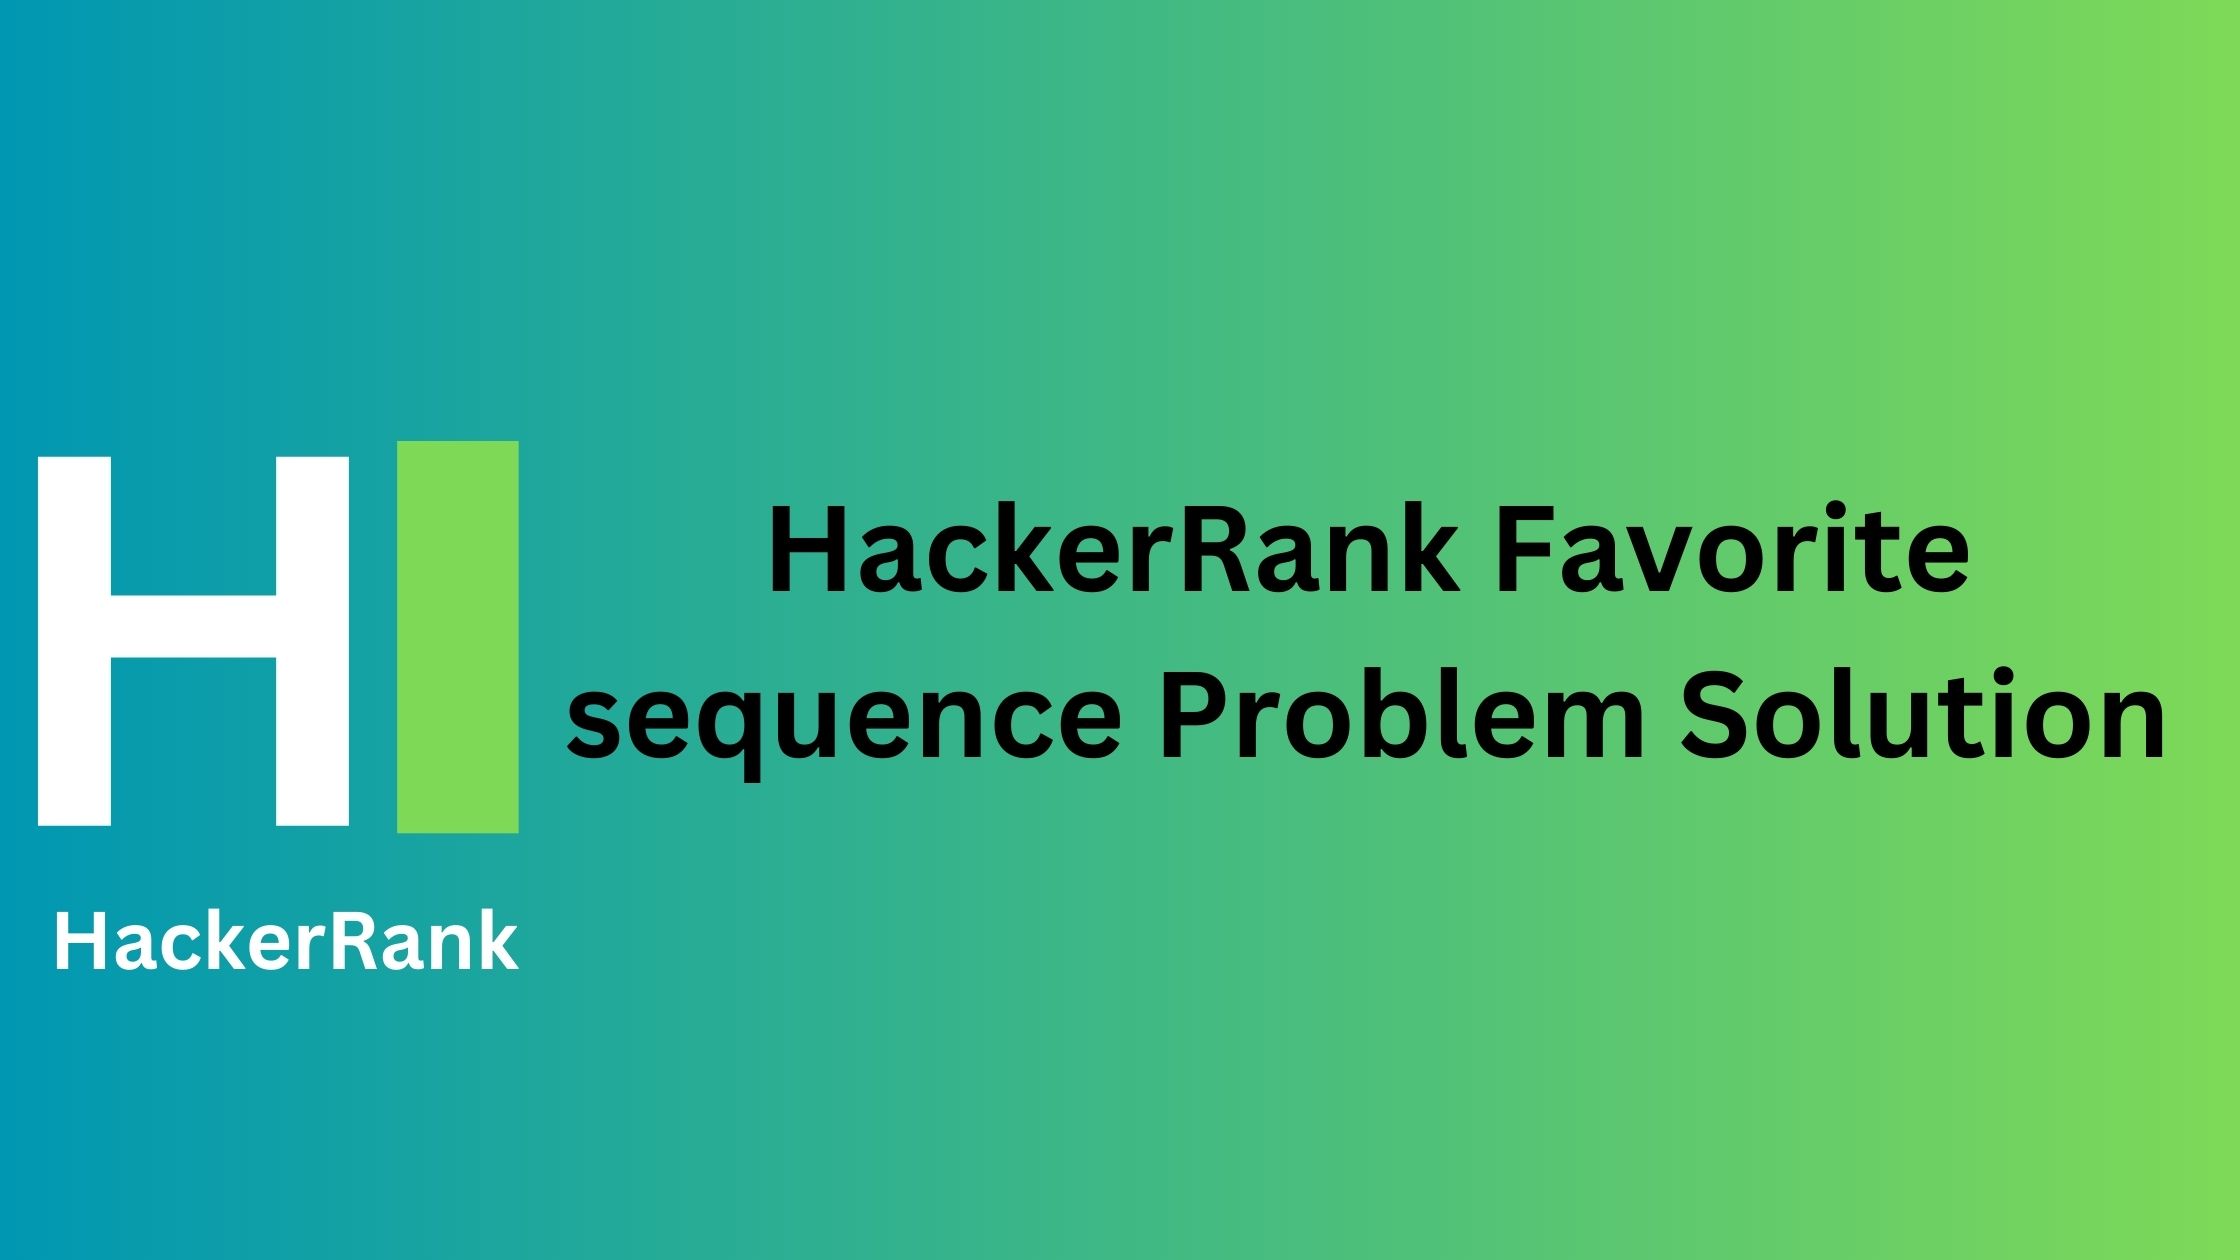 HackerRank Favorite sequence Problem Solution